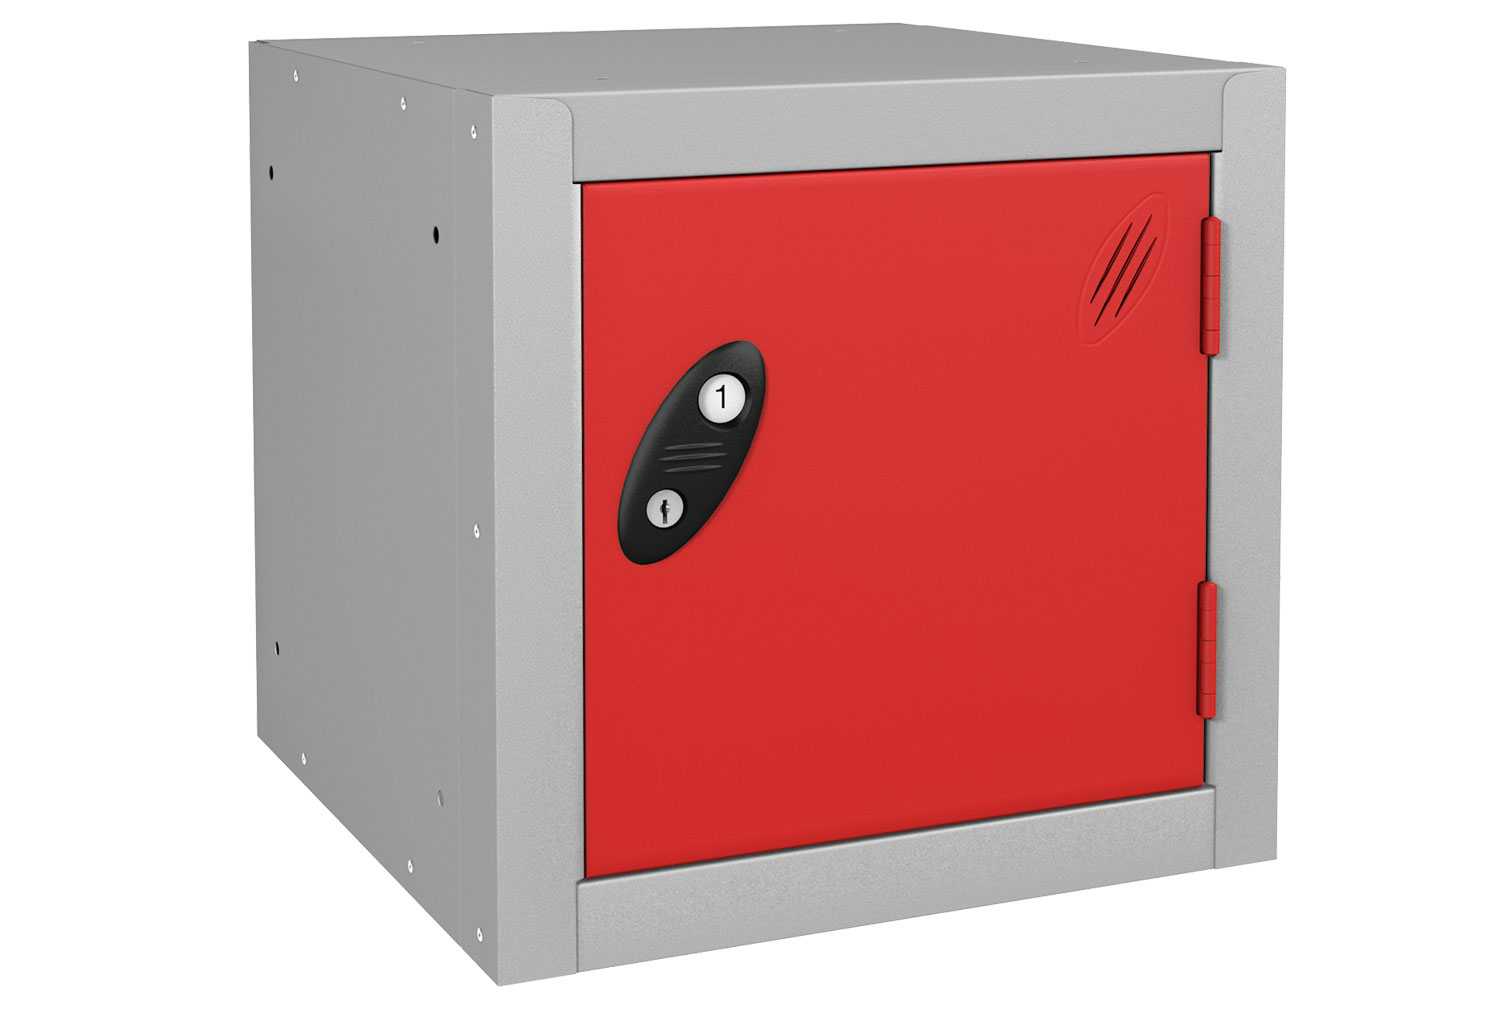 Probe Cube Lockers, 38wx38dx38h (cm), Combination Lock, Silver Body, Red Doors